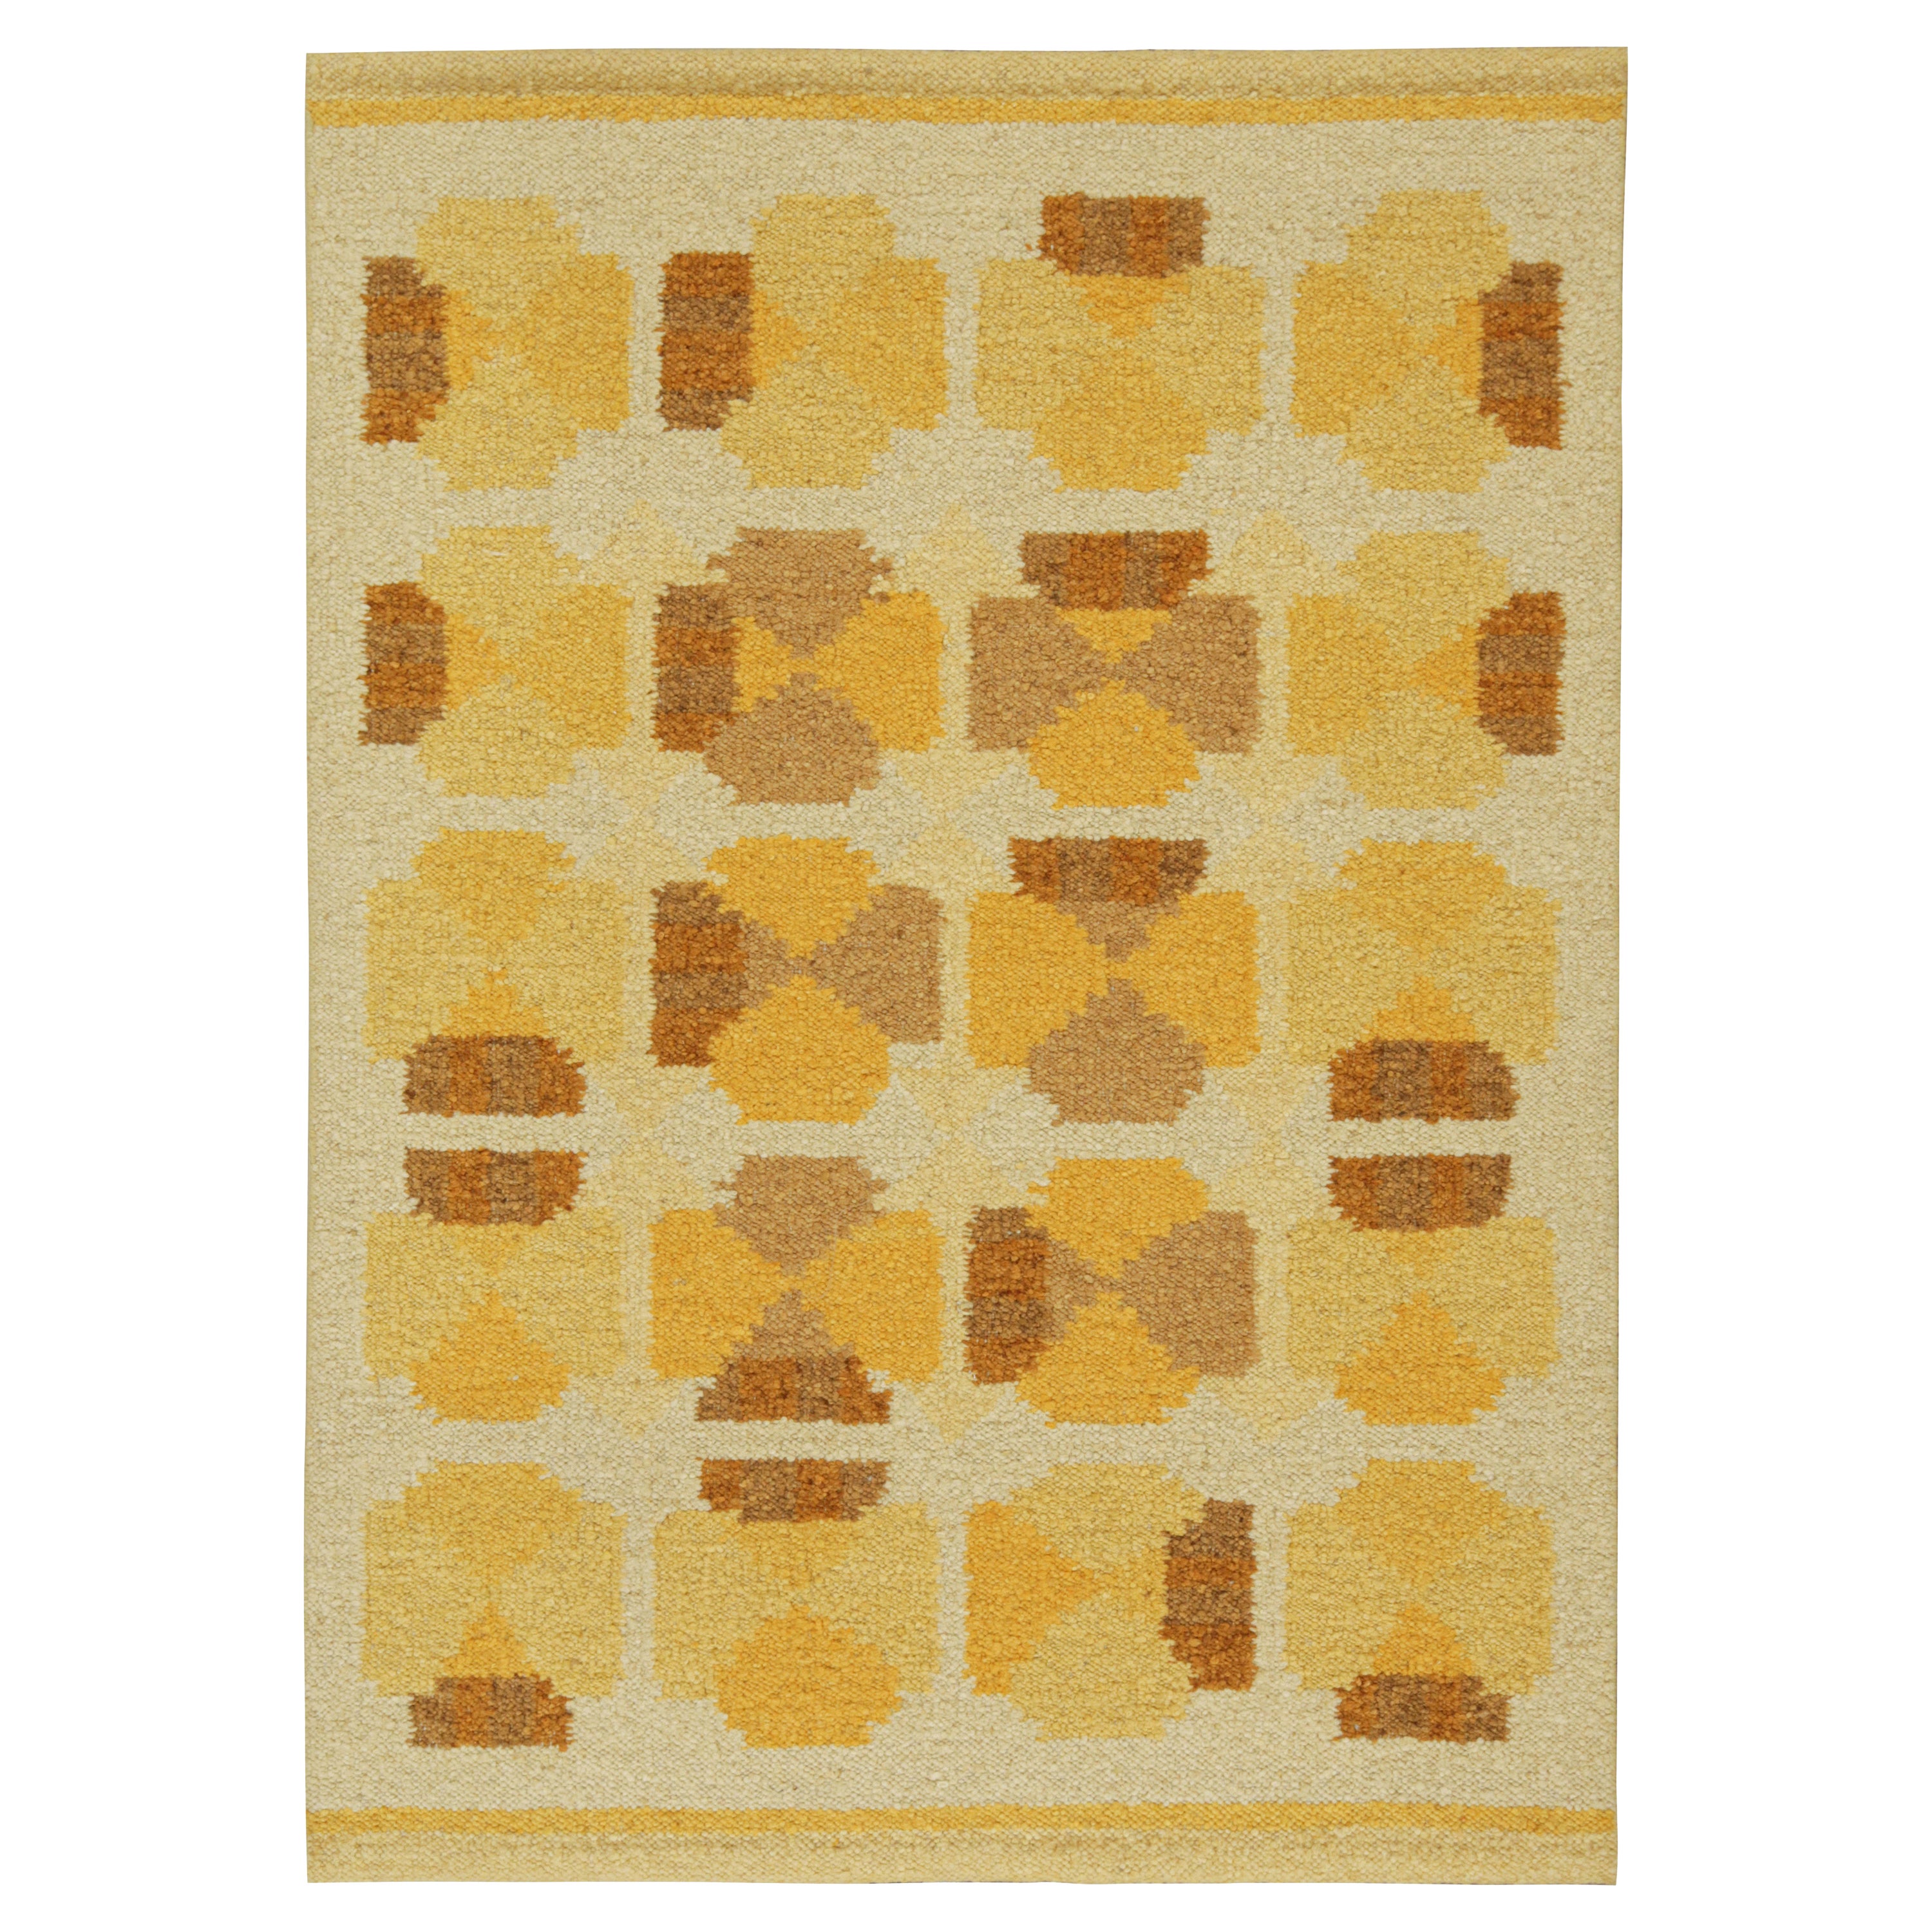 Rug & Kilim’s Scandinavian Style Kilim with Gold-Brown Geometric Patterns